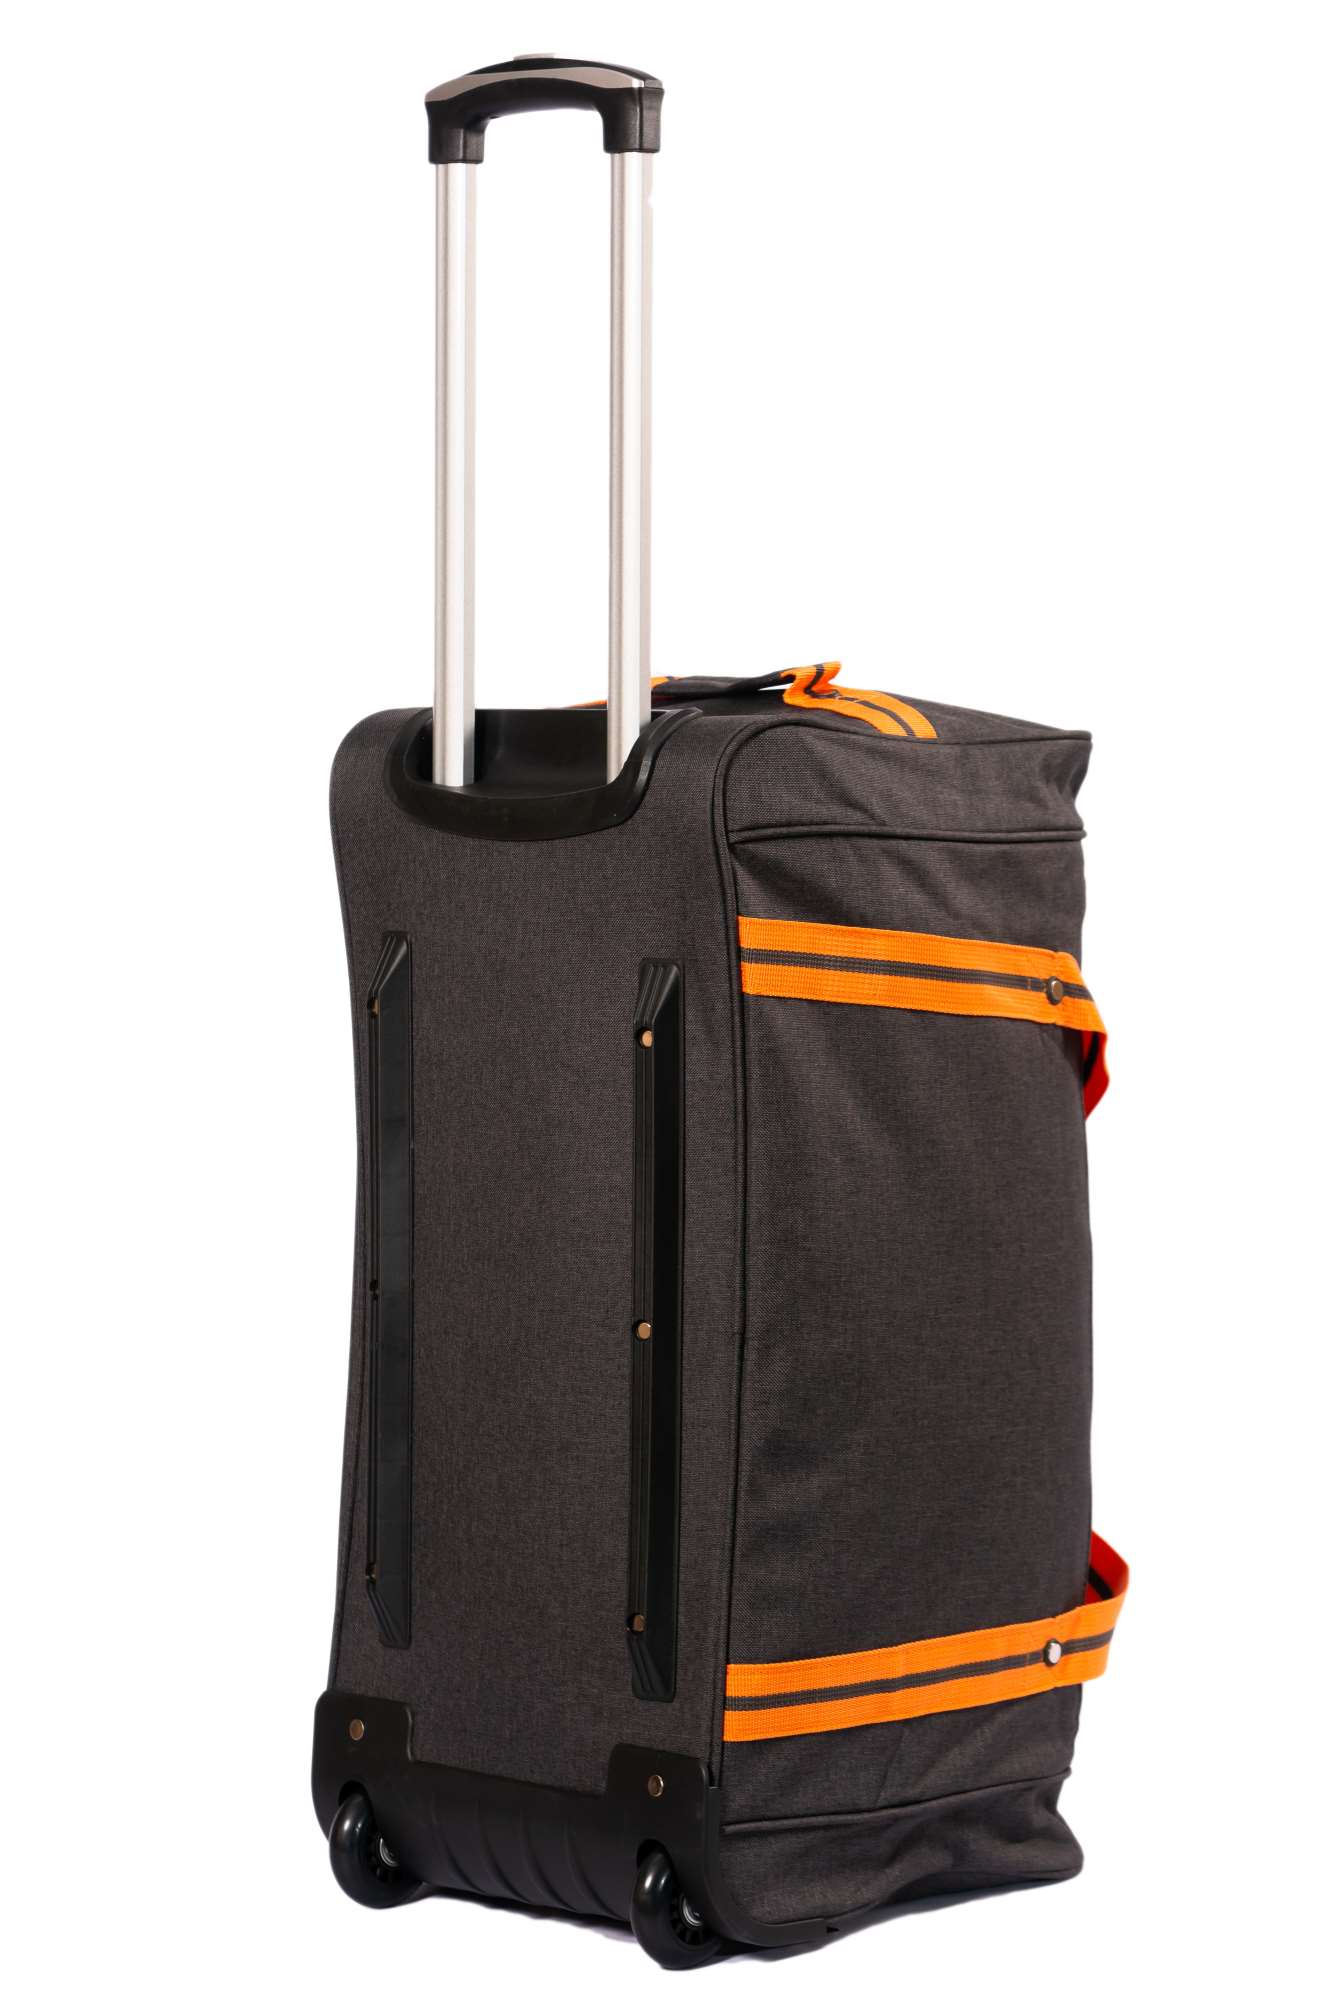 Alezar Sport Bag Orange (2 wheels) 28